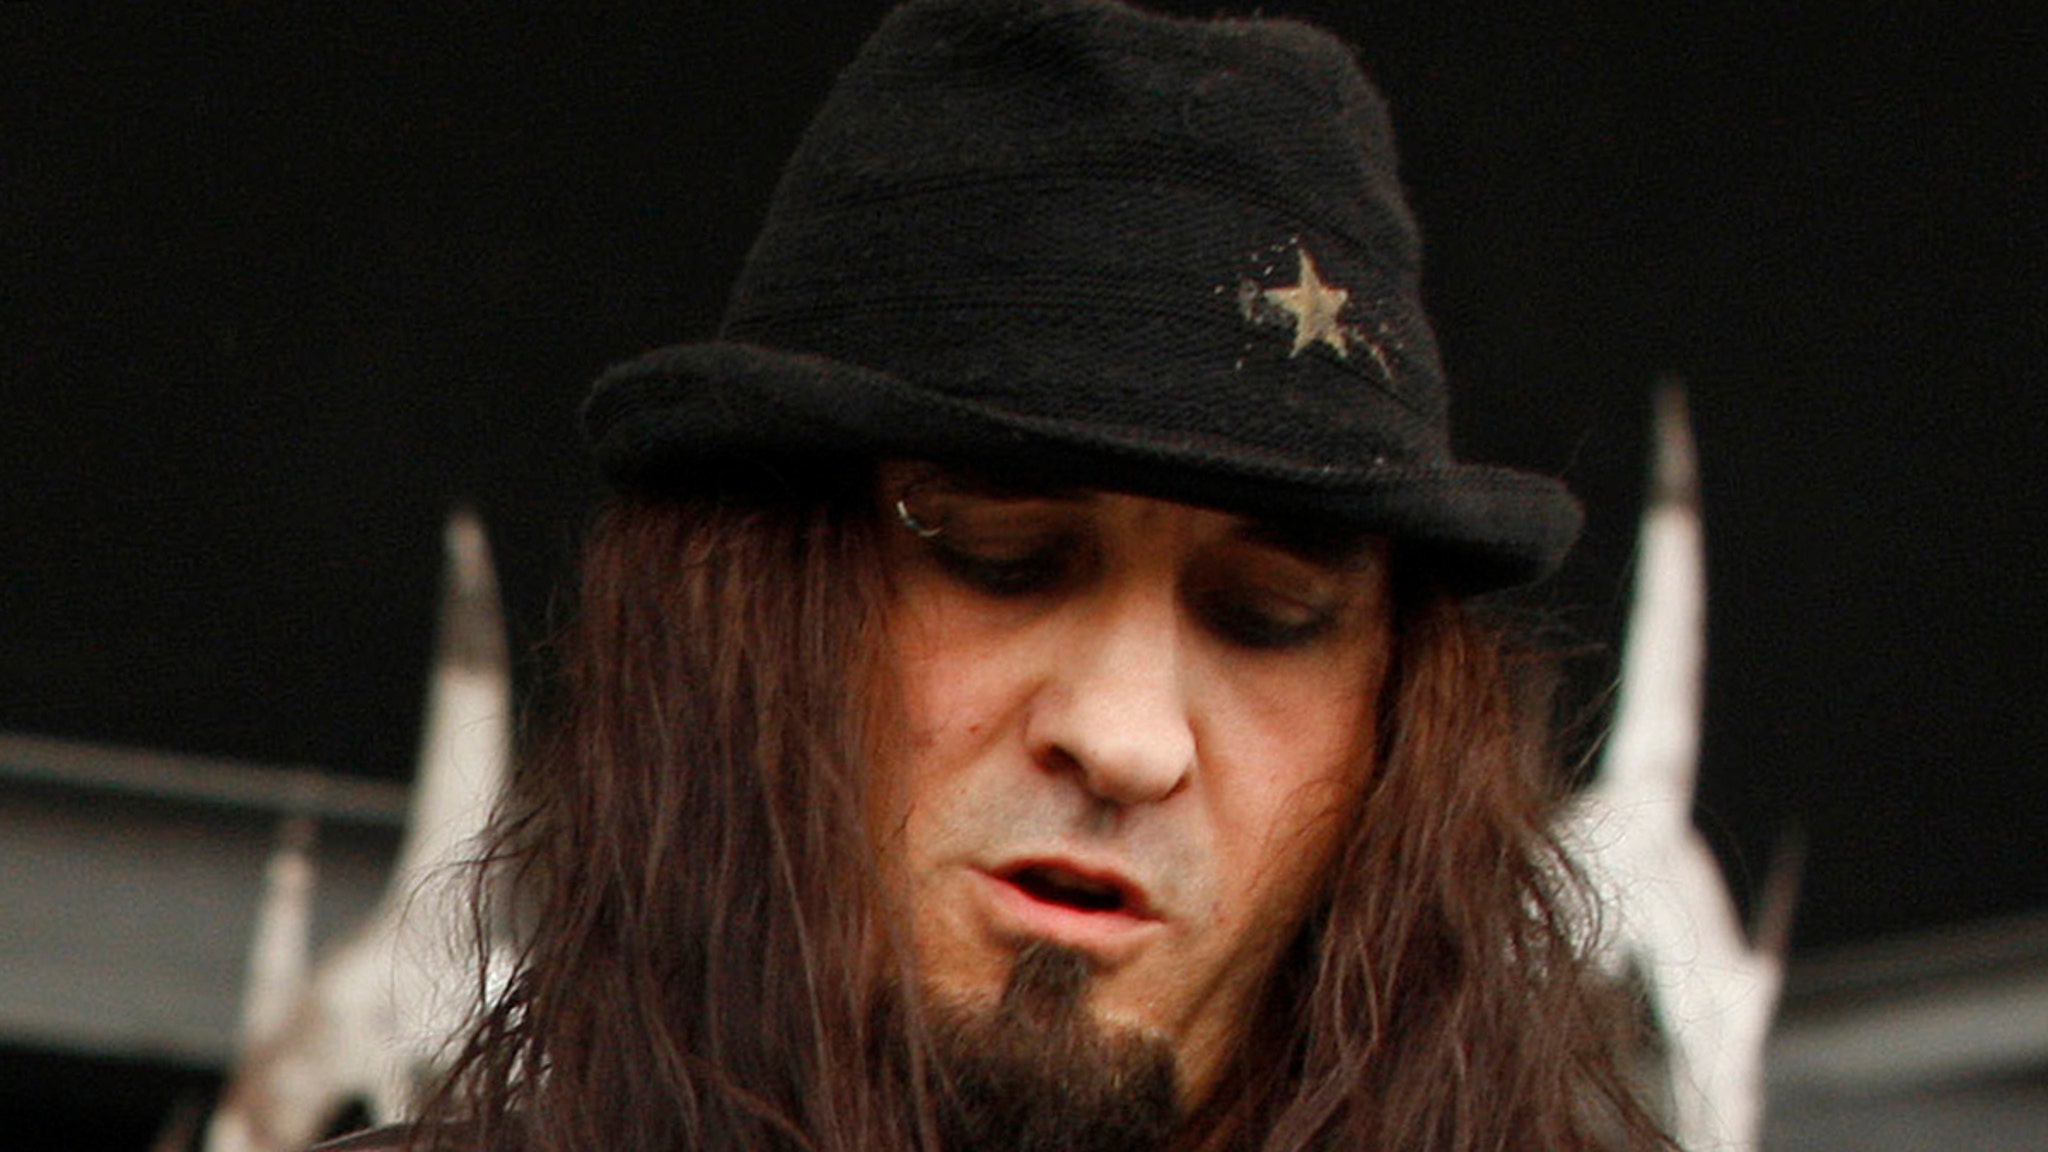 Saliva guitarist Wayne Swinny has died aged 59 after a brain hemorrhage.